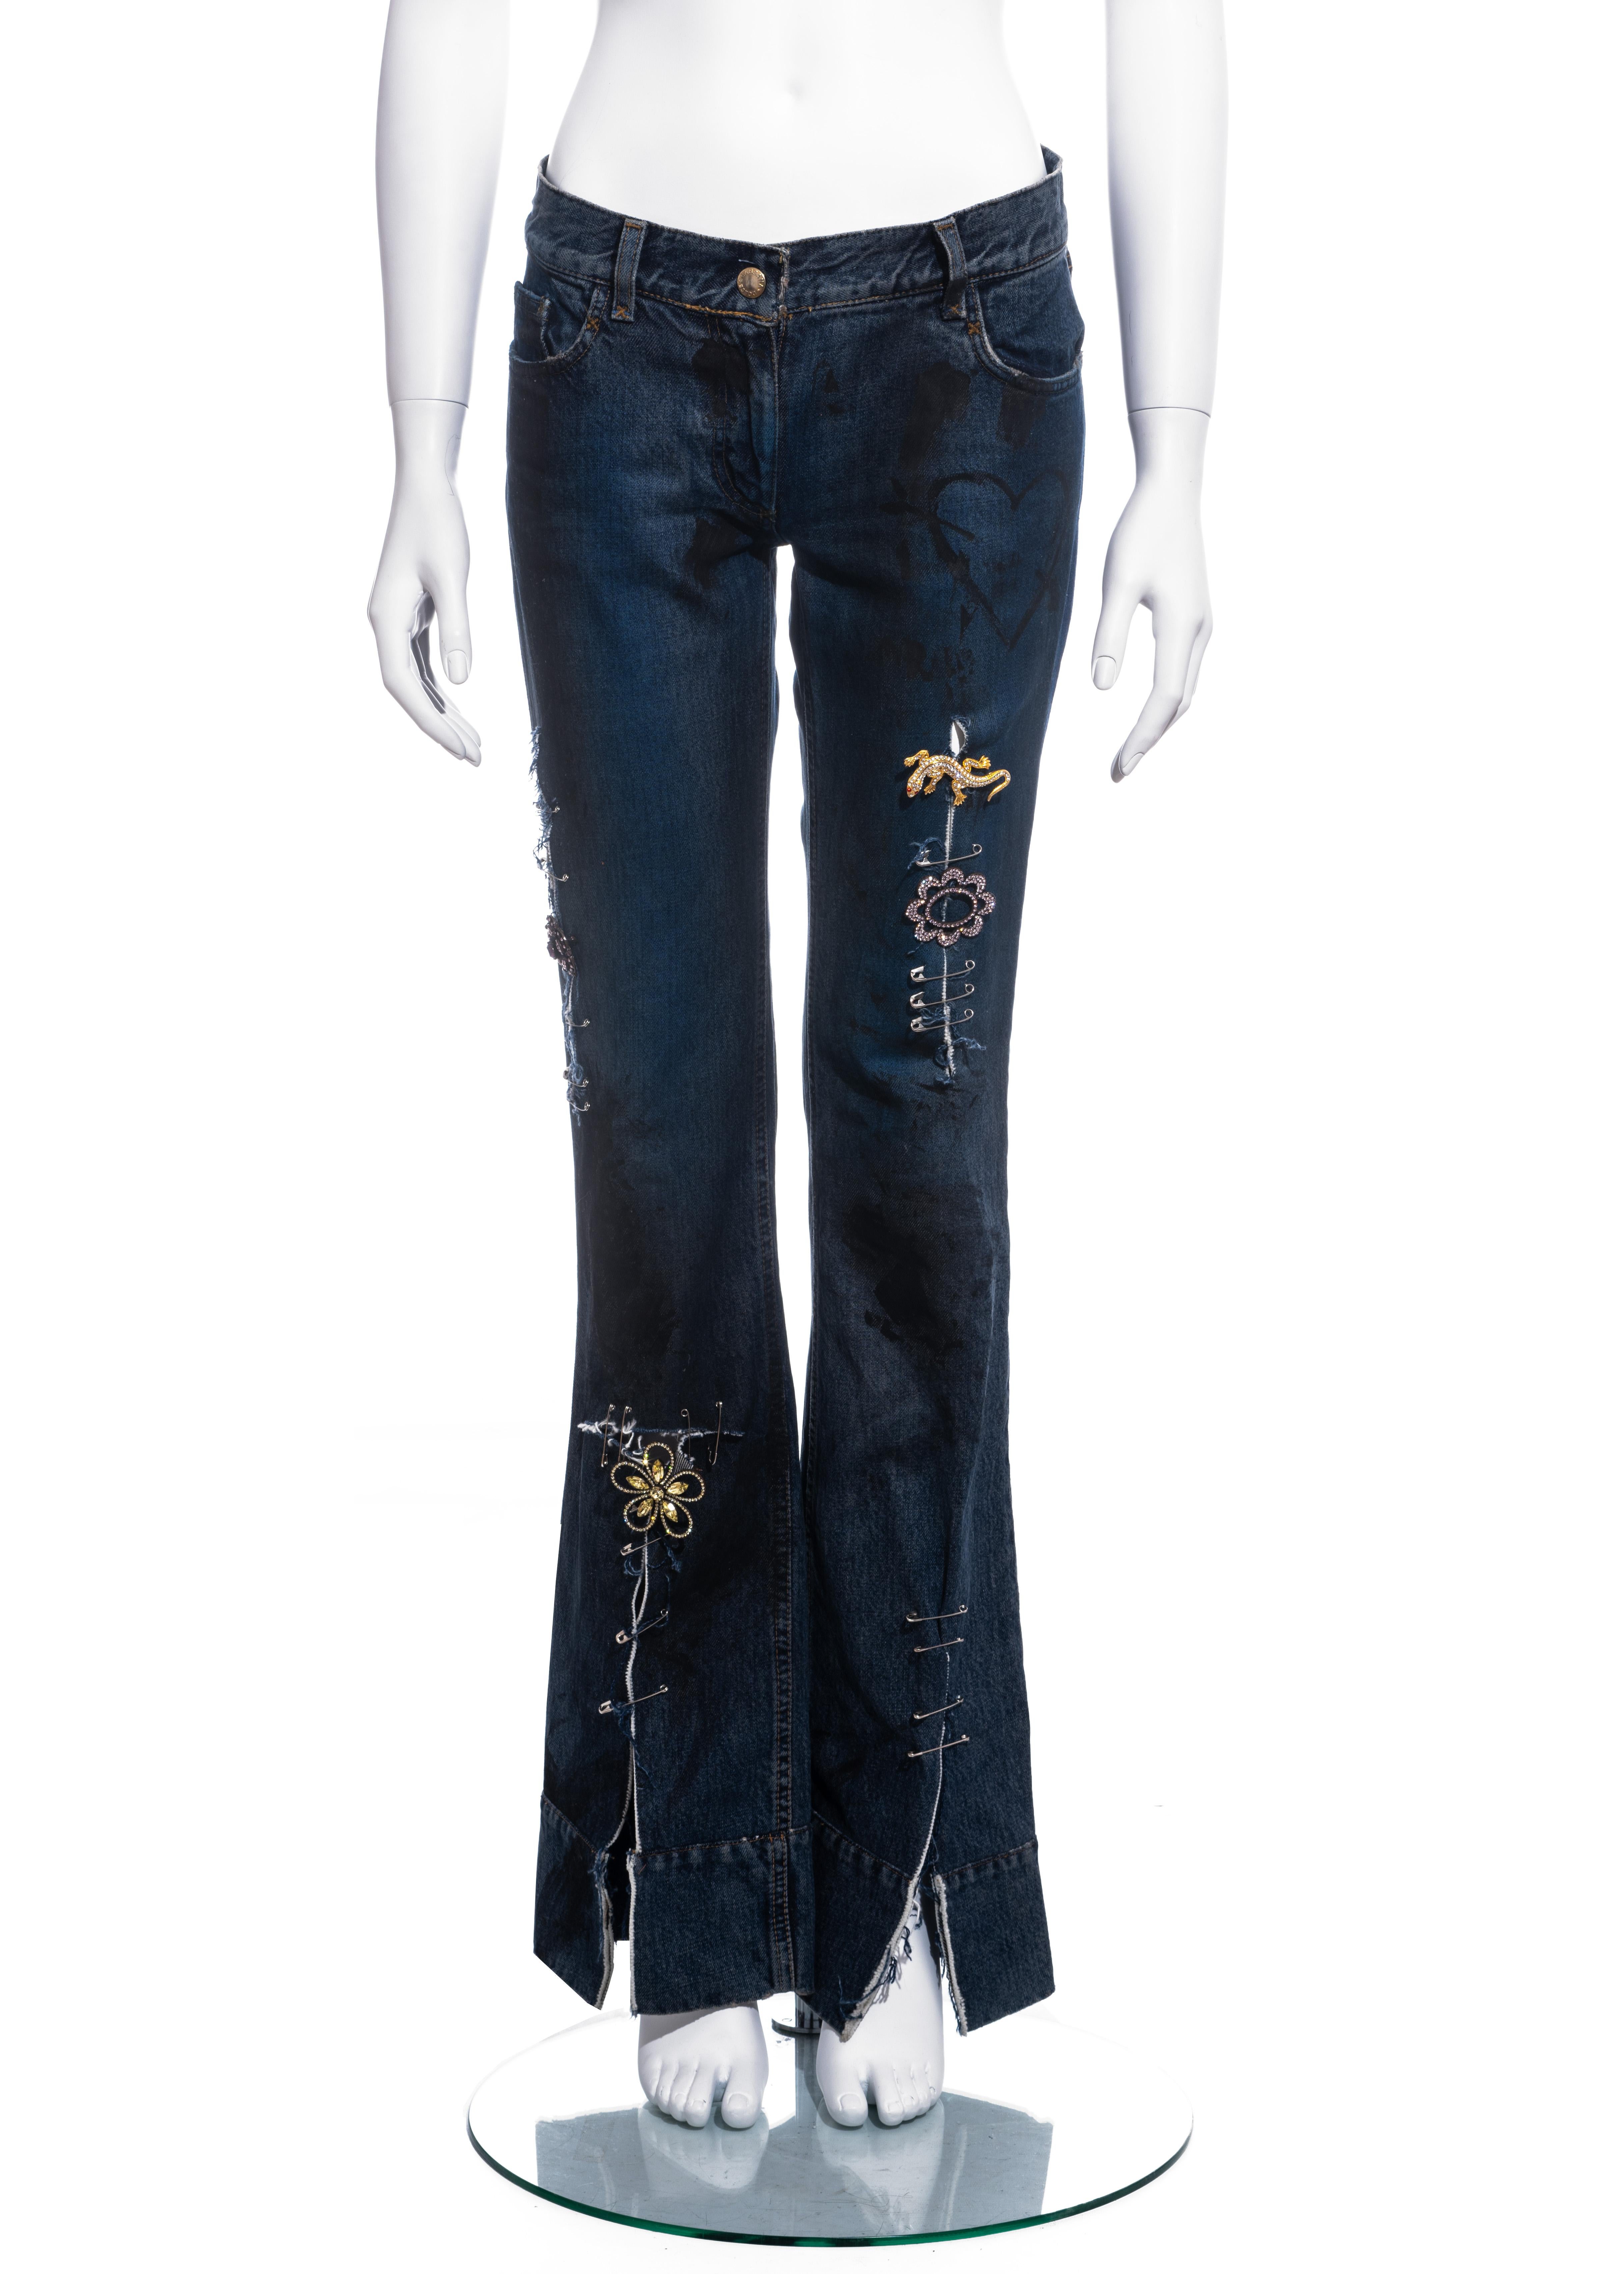 Dolce and Gabbana indigo denim graffiti punk jeans with safety pins 